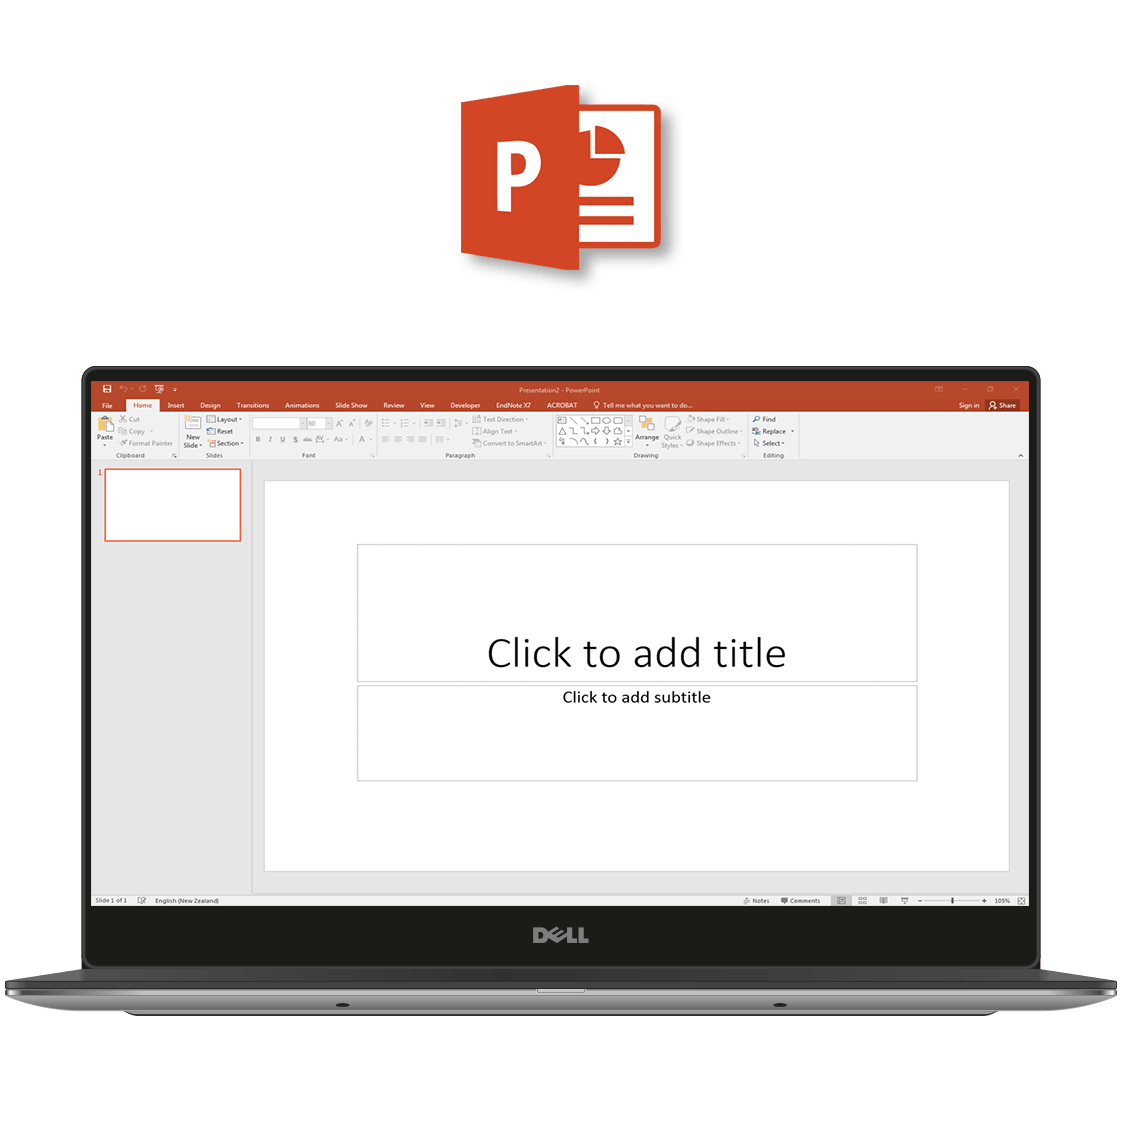 Ofertas de licencia de Microsoft PowerPoint 2016.com